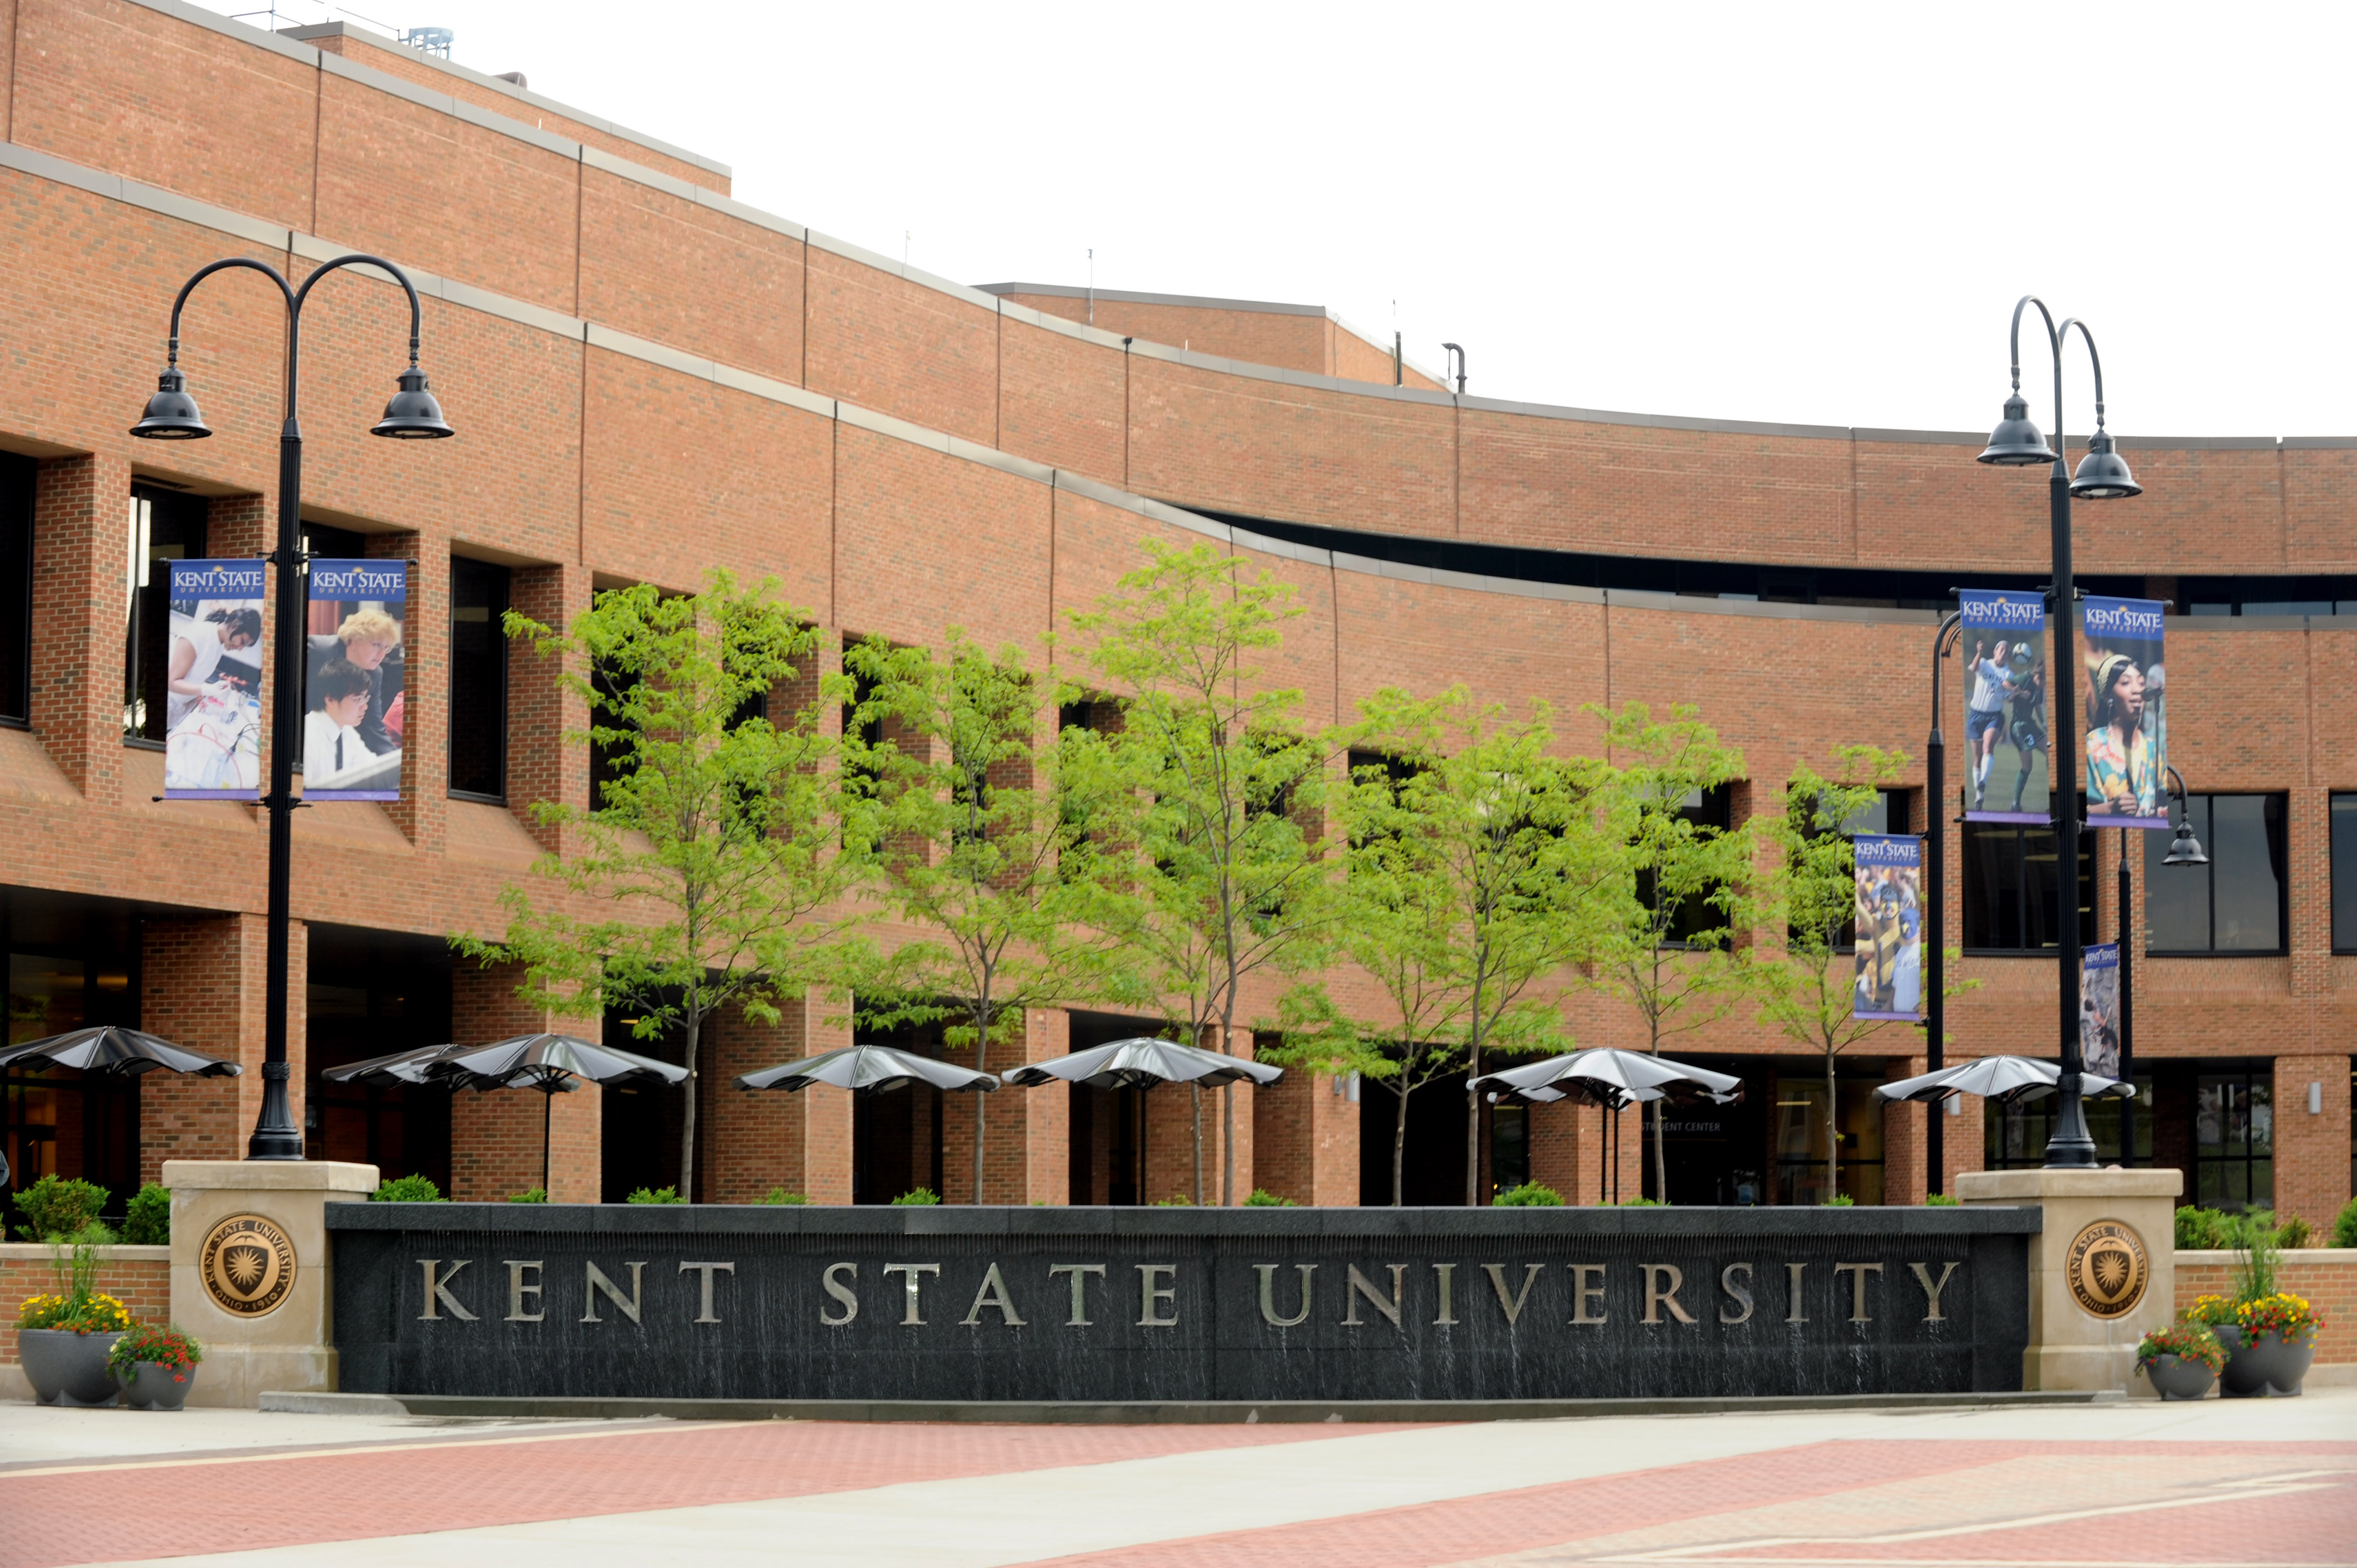 Kent State University building